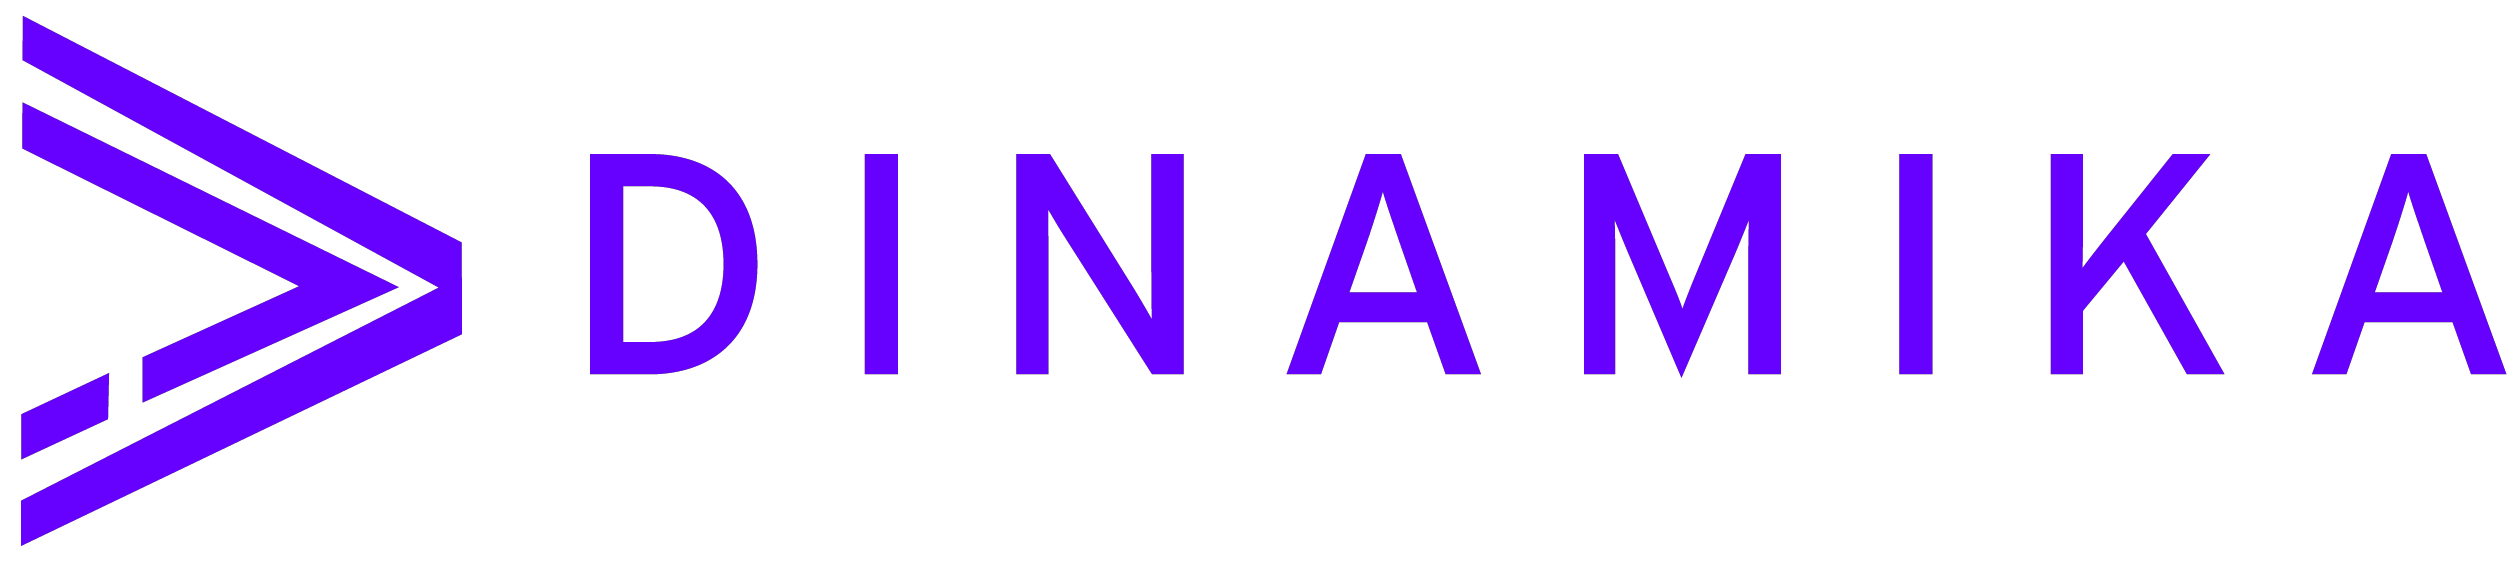 Logo Dinamika gradiente nome roxo